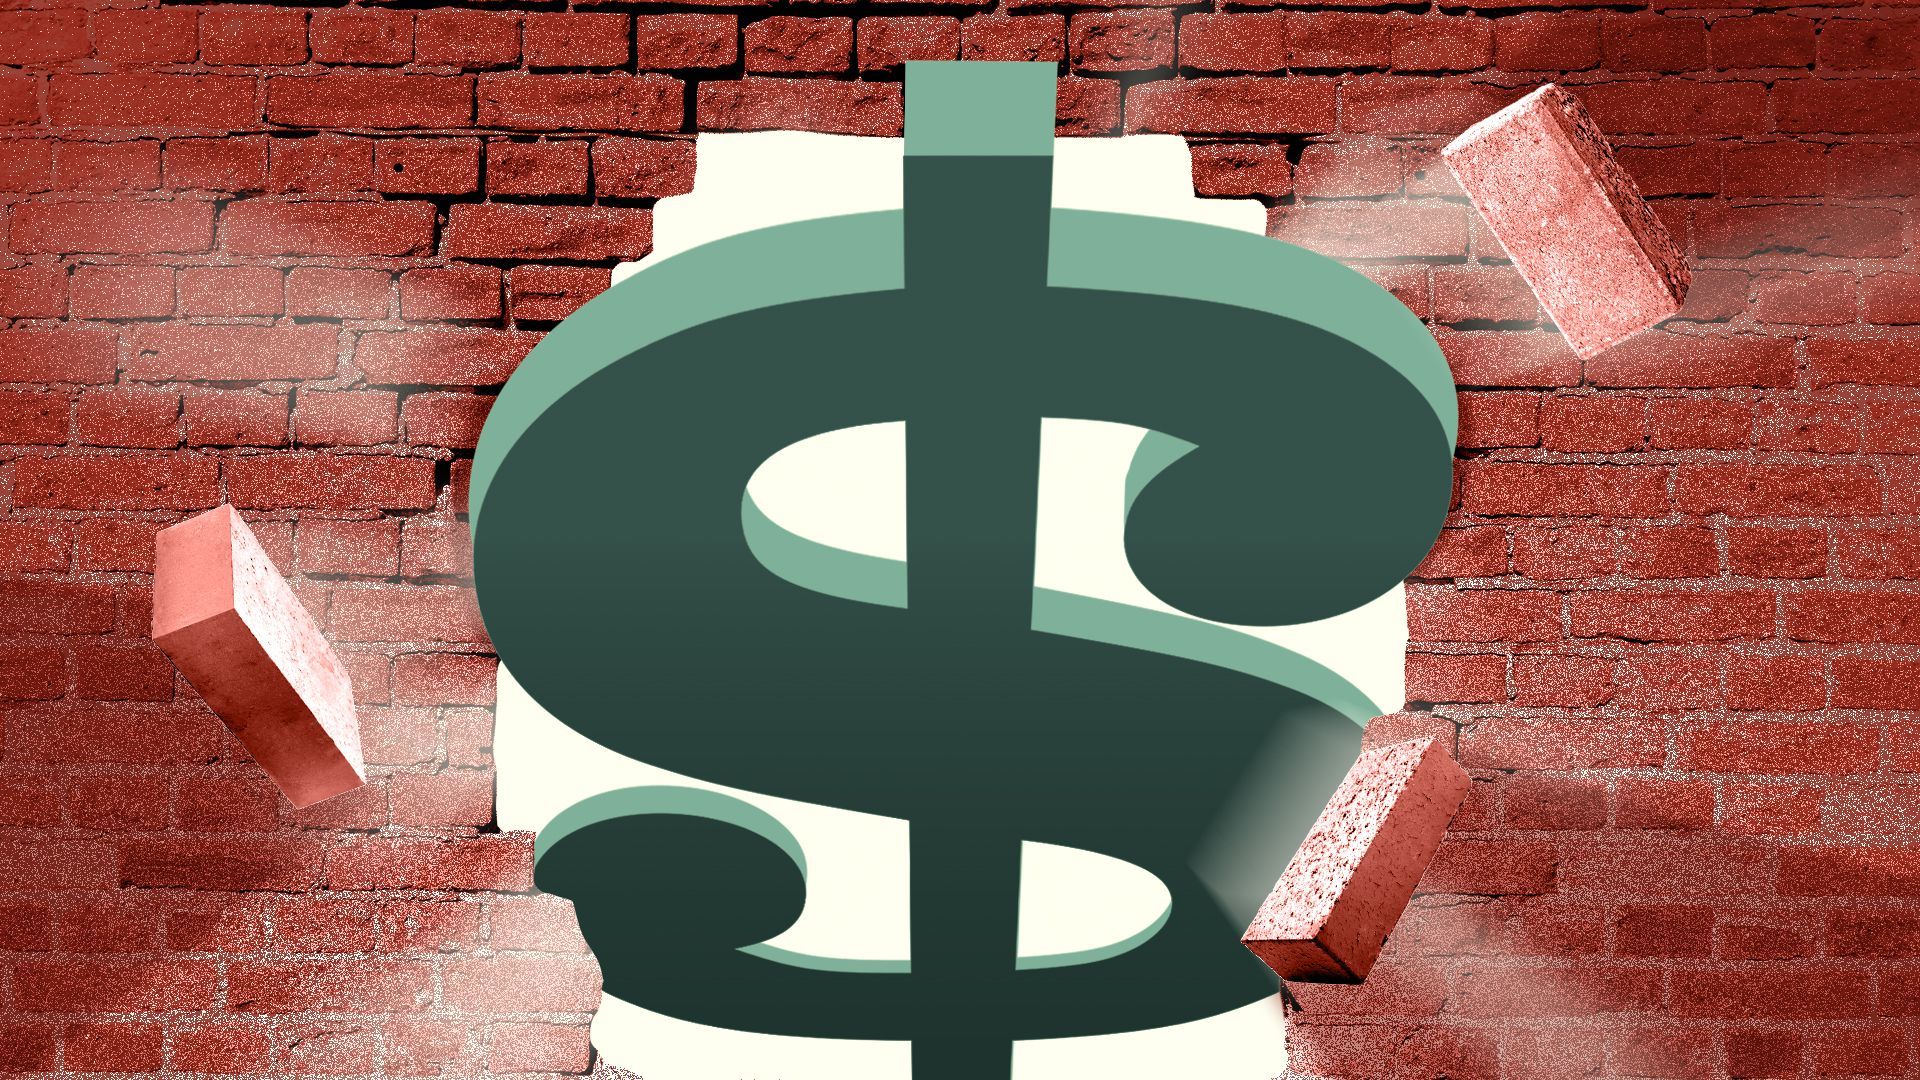 Illustration of a giant dollar sign bursting through a brick wall.